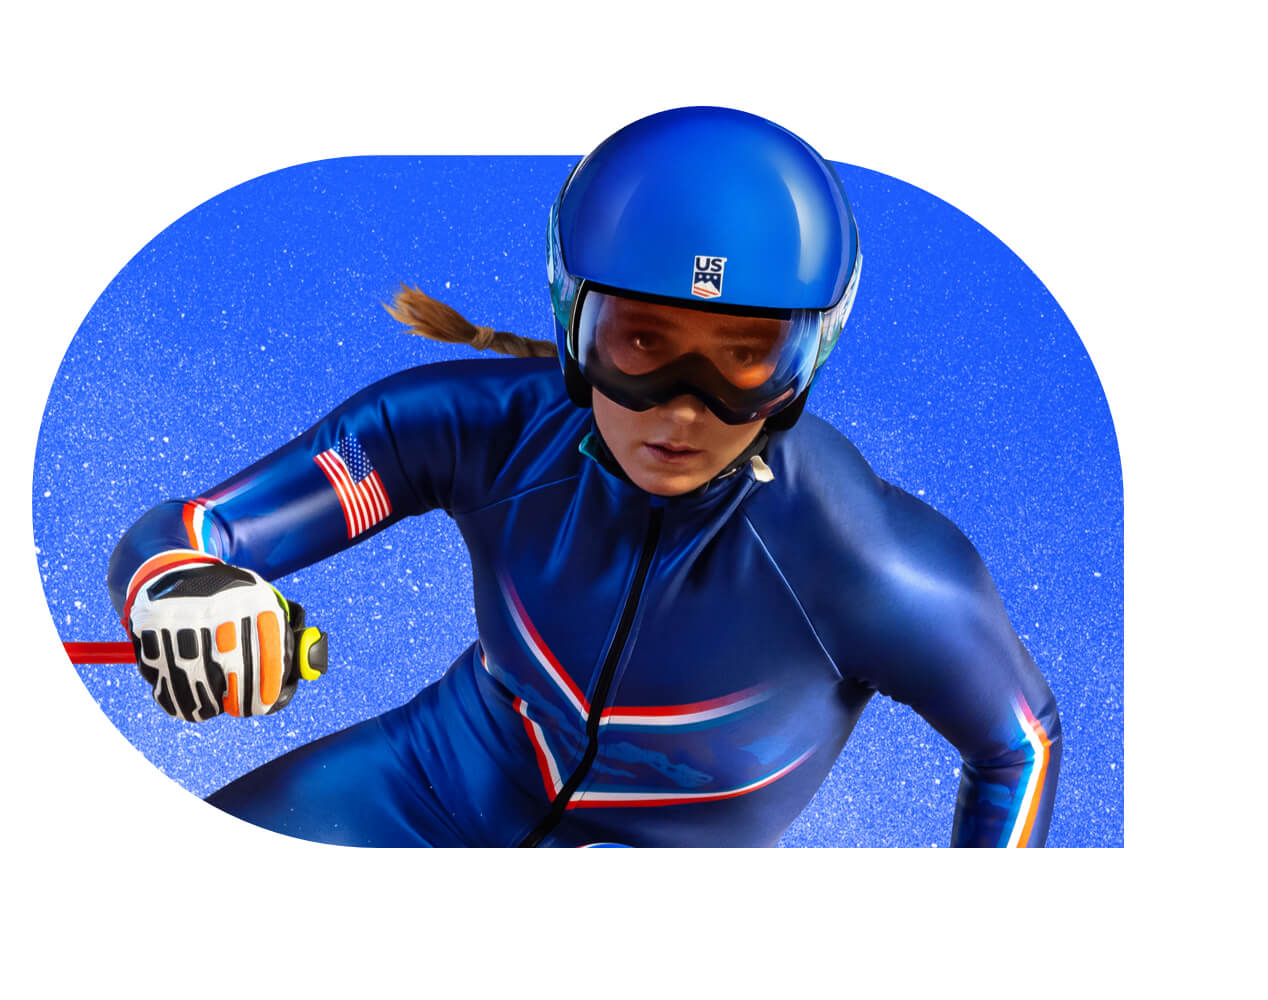 Mikaela Shiffrin, U.S. Olympic Gold Medalist, Alpine Skiing